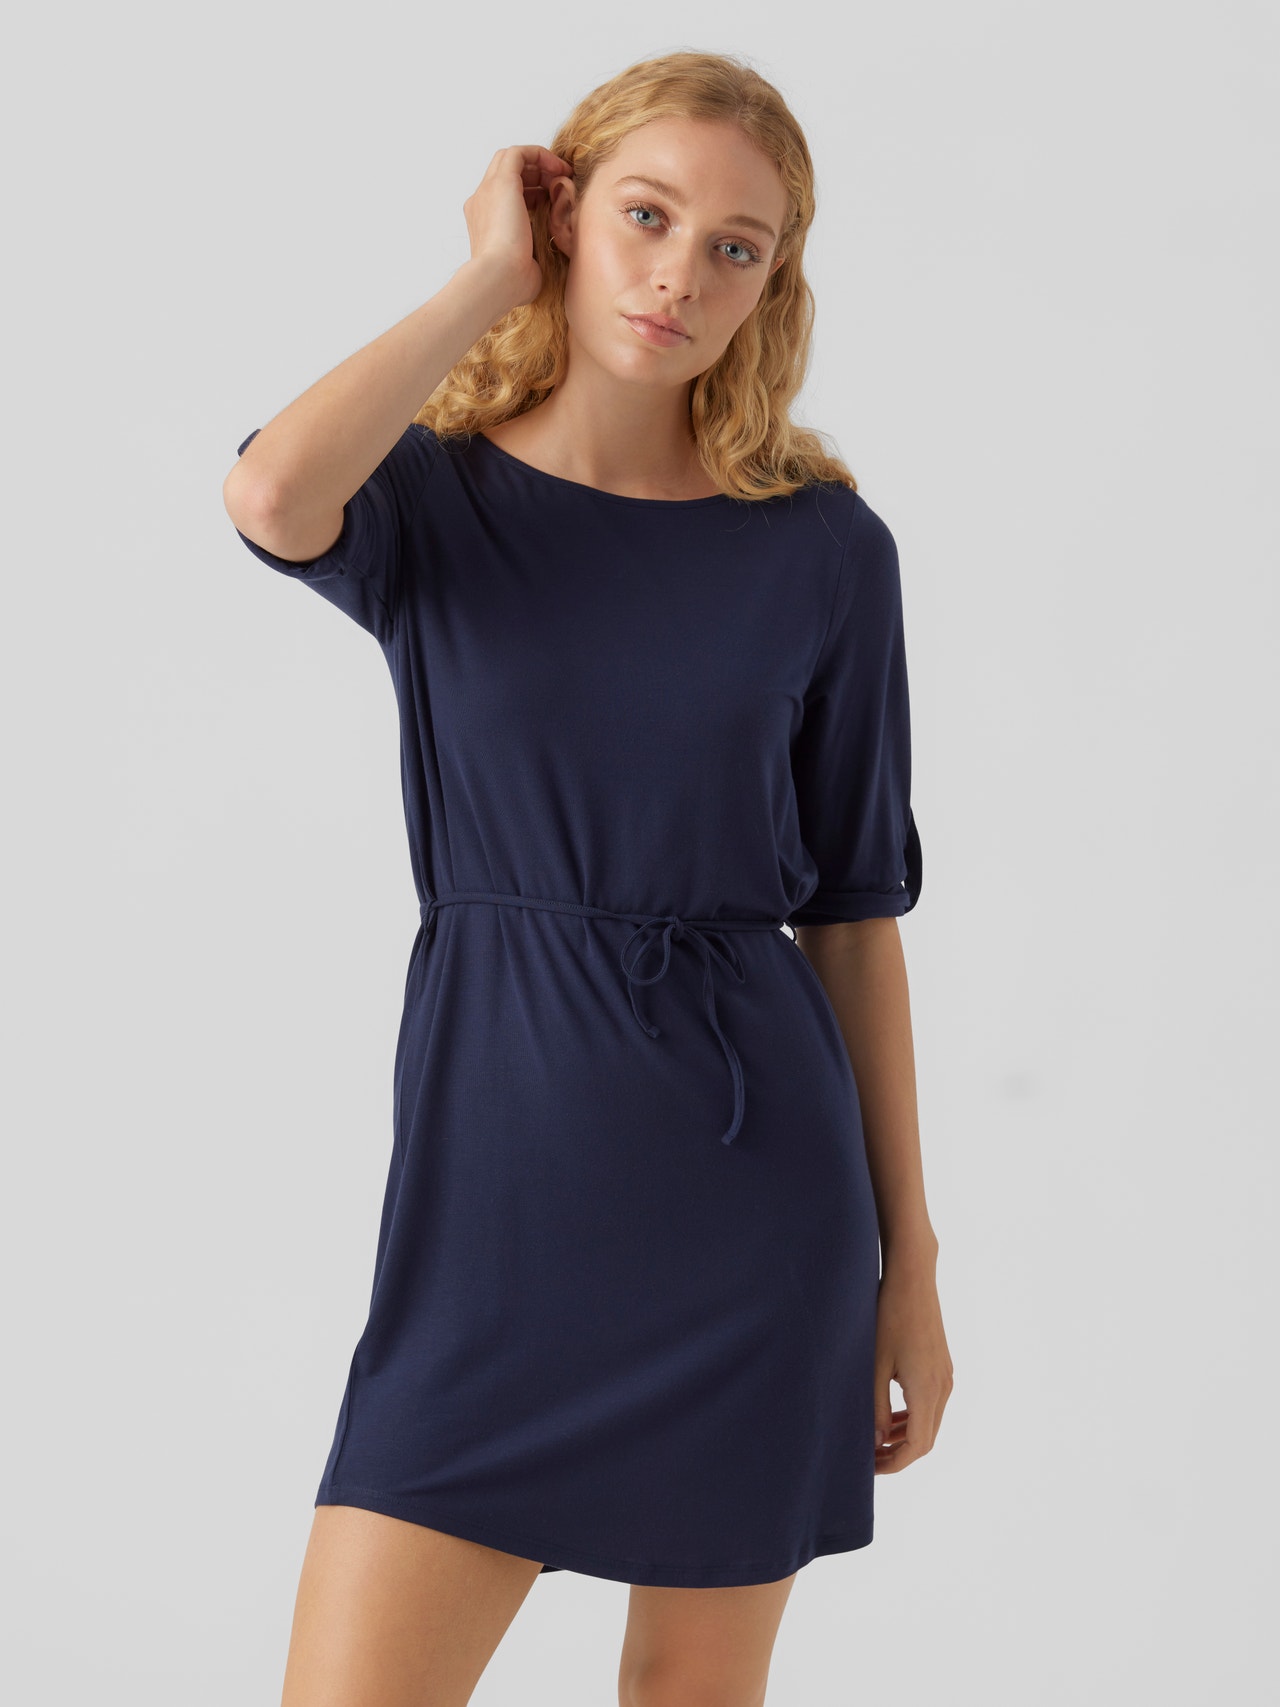 VMAVA dress discount! 50% Moda® with Short Vero |